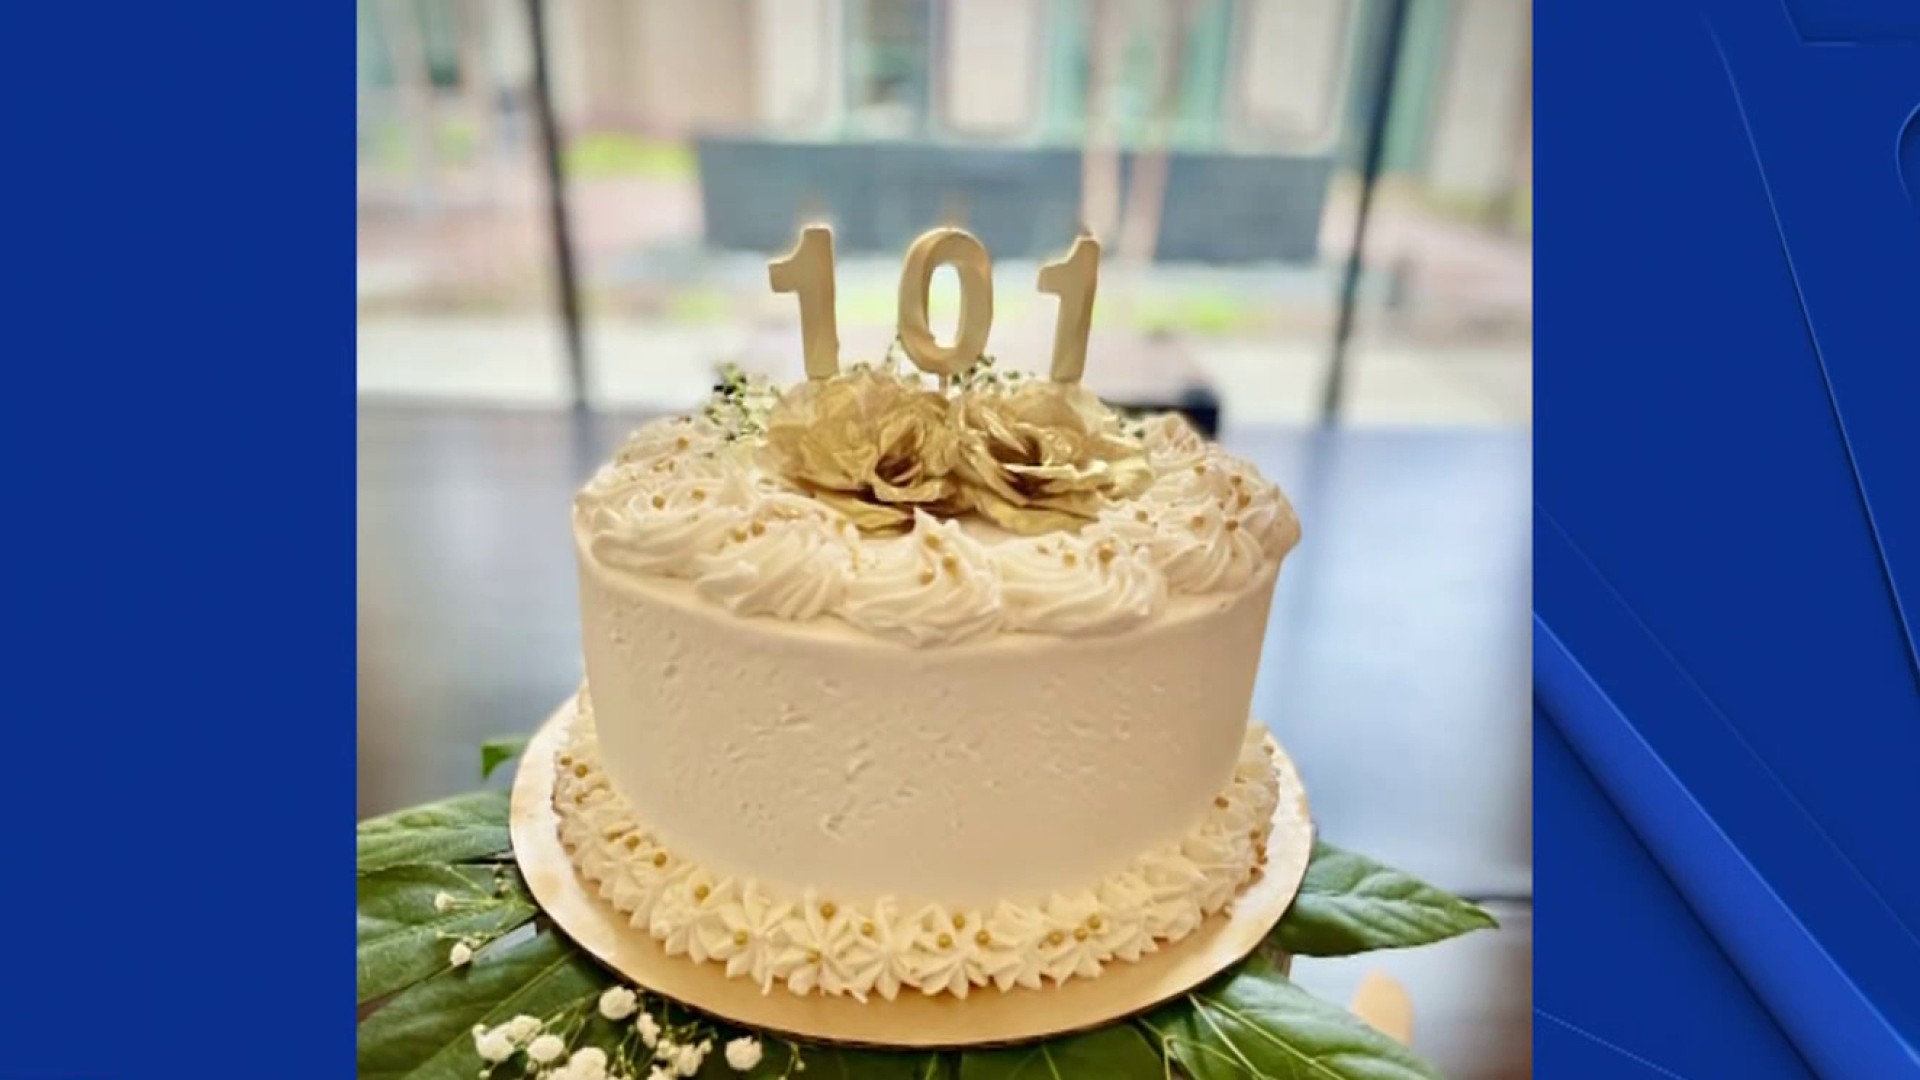 Newport native celebrates 101st birthday